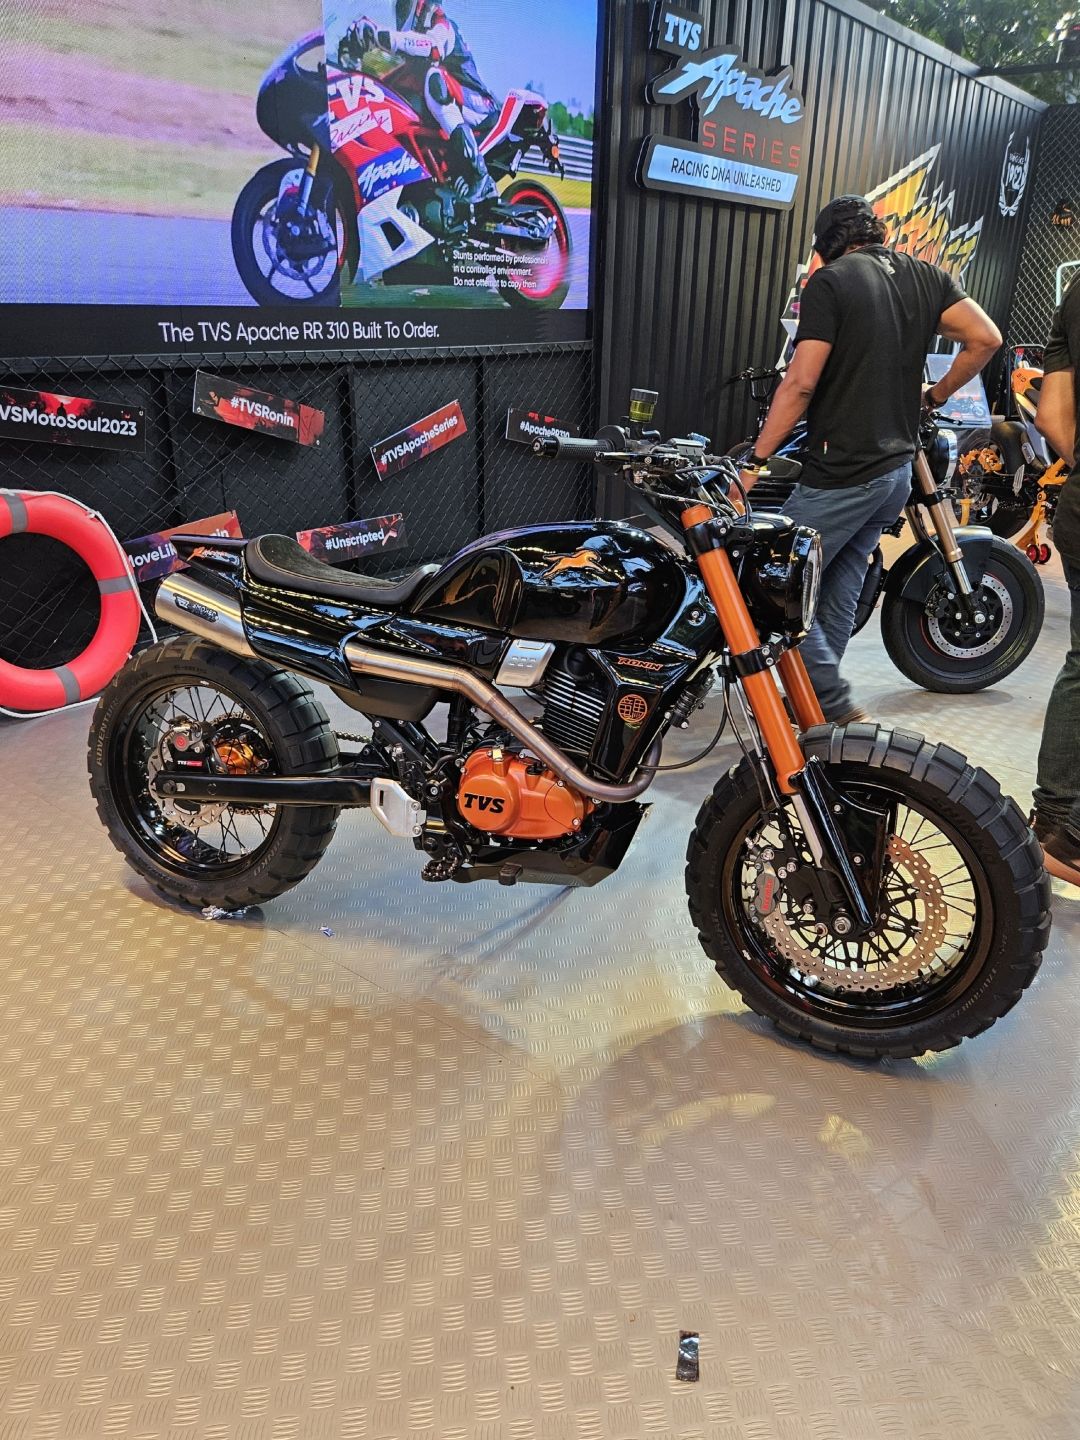 TVS MotoSoul 2023 sees 7 custom bikes and Alpinestar co-branded TVS riding  gear